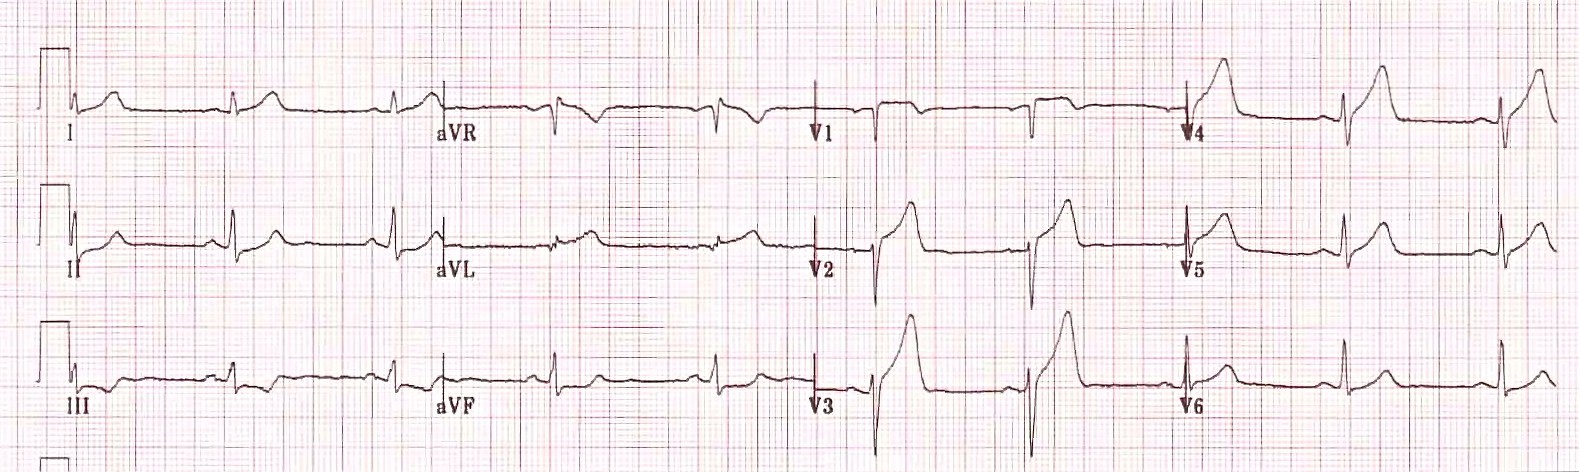 Кардиограмма пациента с острым коронарным синдромом - предположительно инфаркт миокарда.